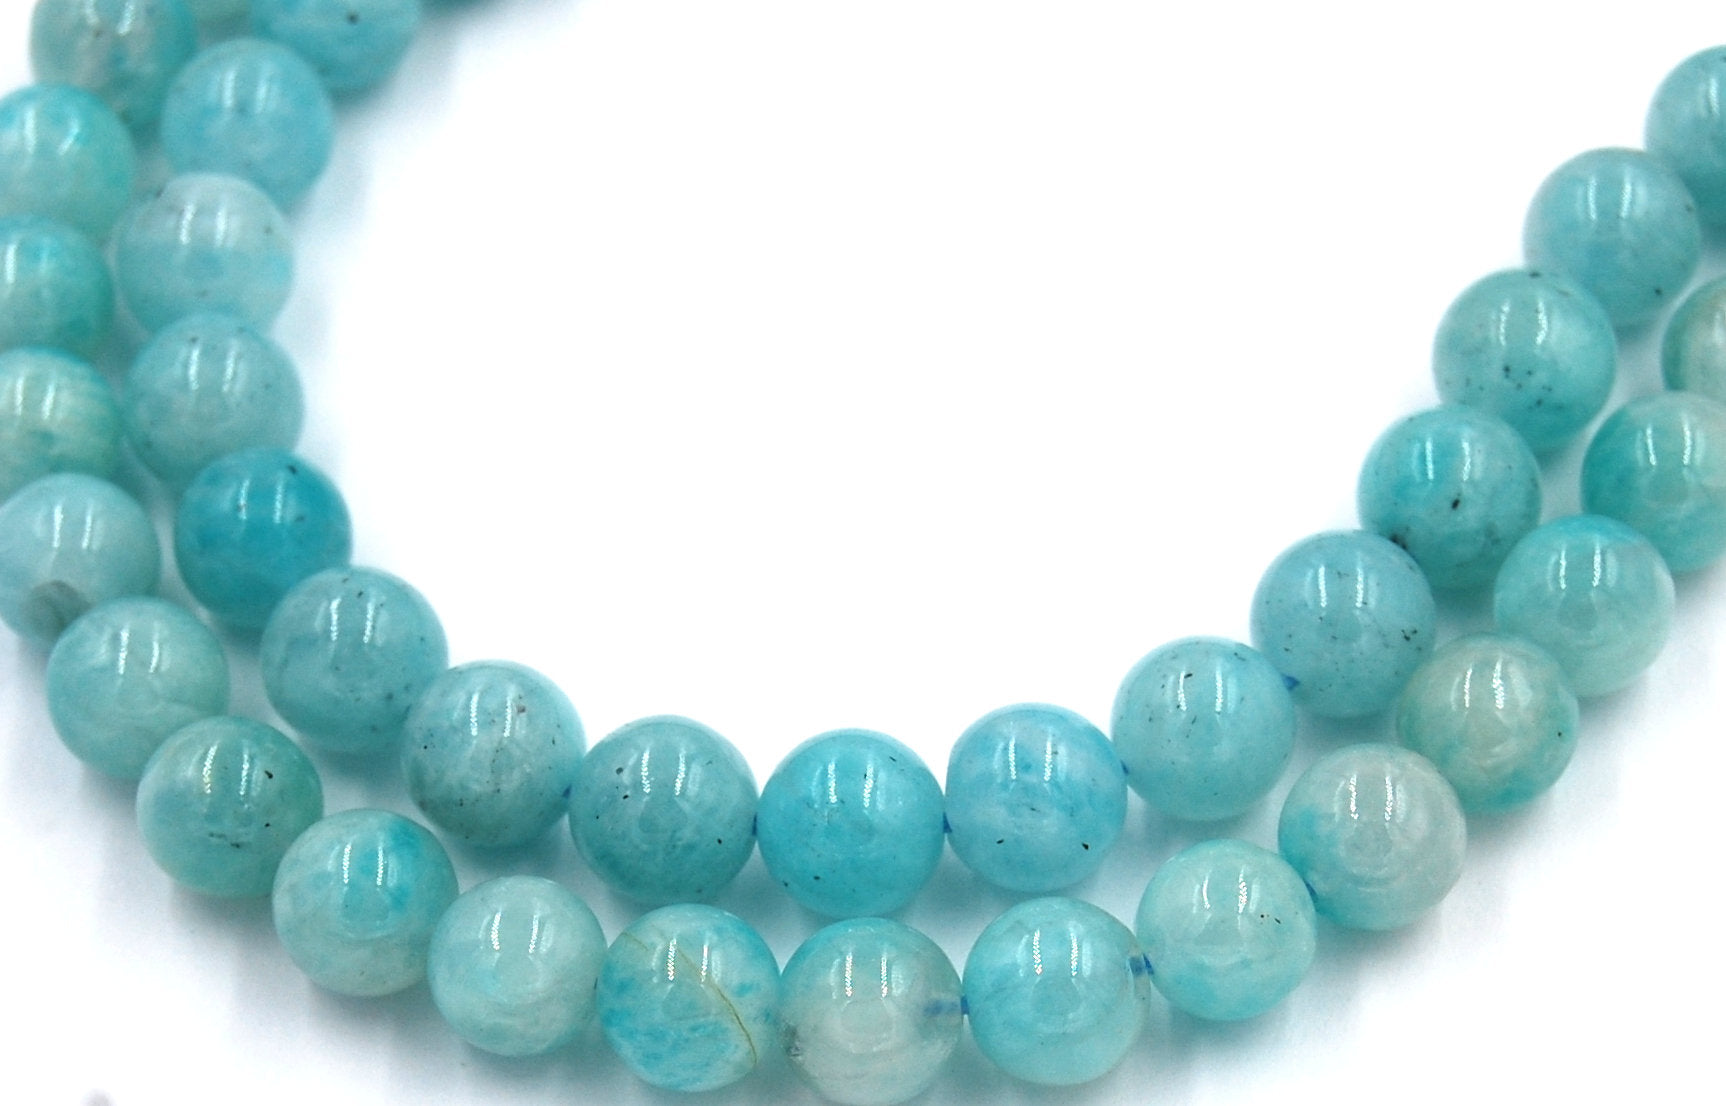 8mm Brazil Amazonite Round Beads in Ocean Blue-Green -15.75 inch strand